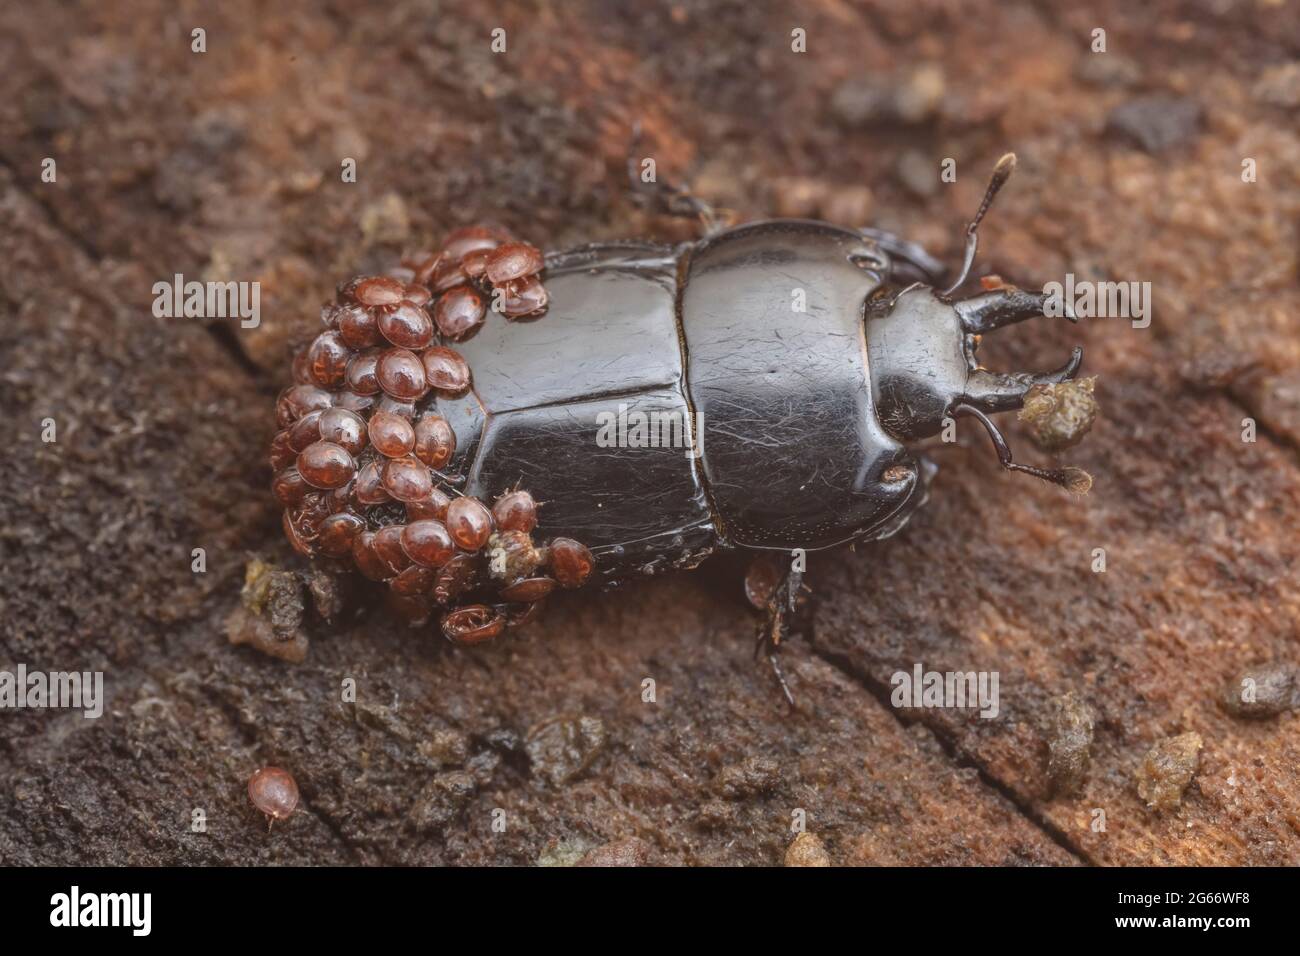 A Clown Beetle (Hololepta lucida) with phoretic mites. Stock Photo